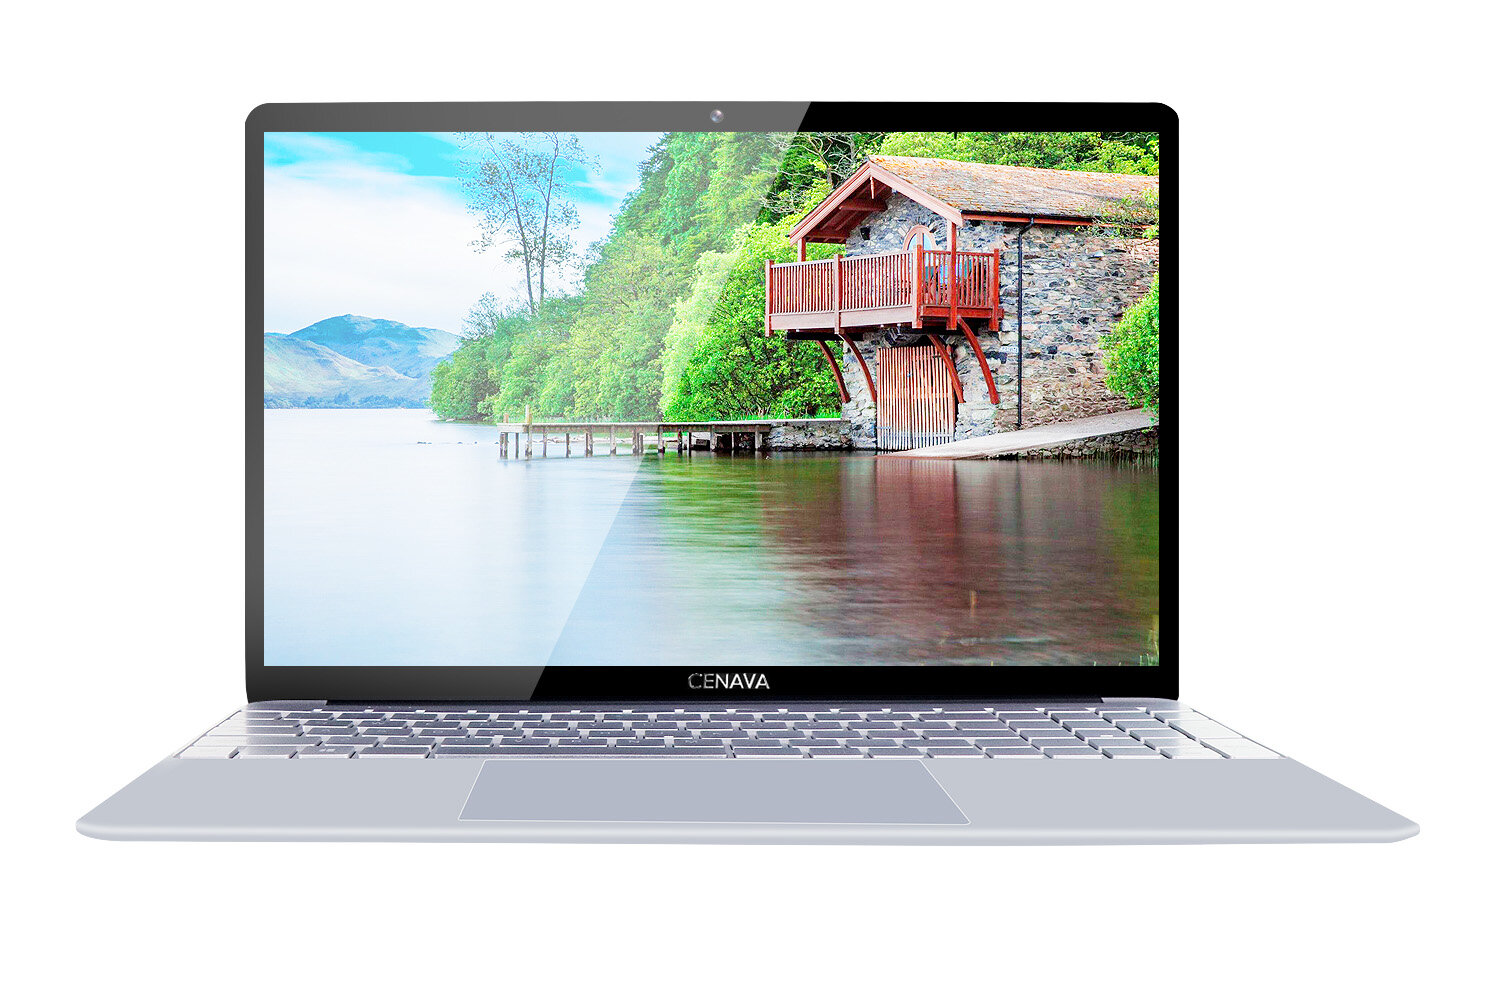 CENAVA F151 Laptop 15.6 inch Intel Core J3455 Intel HD Graphics 500 Win10 8G RAM 128GB SSD Notebook TN Screen - Rose Gold